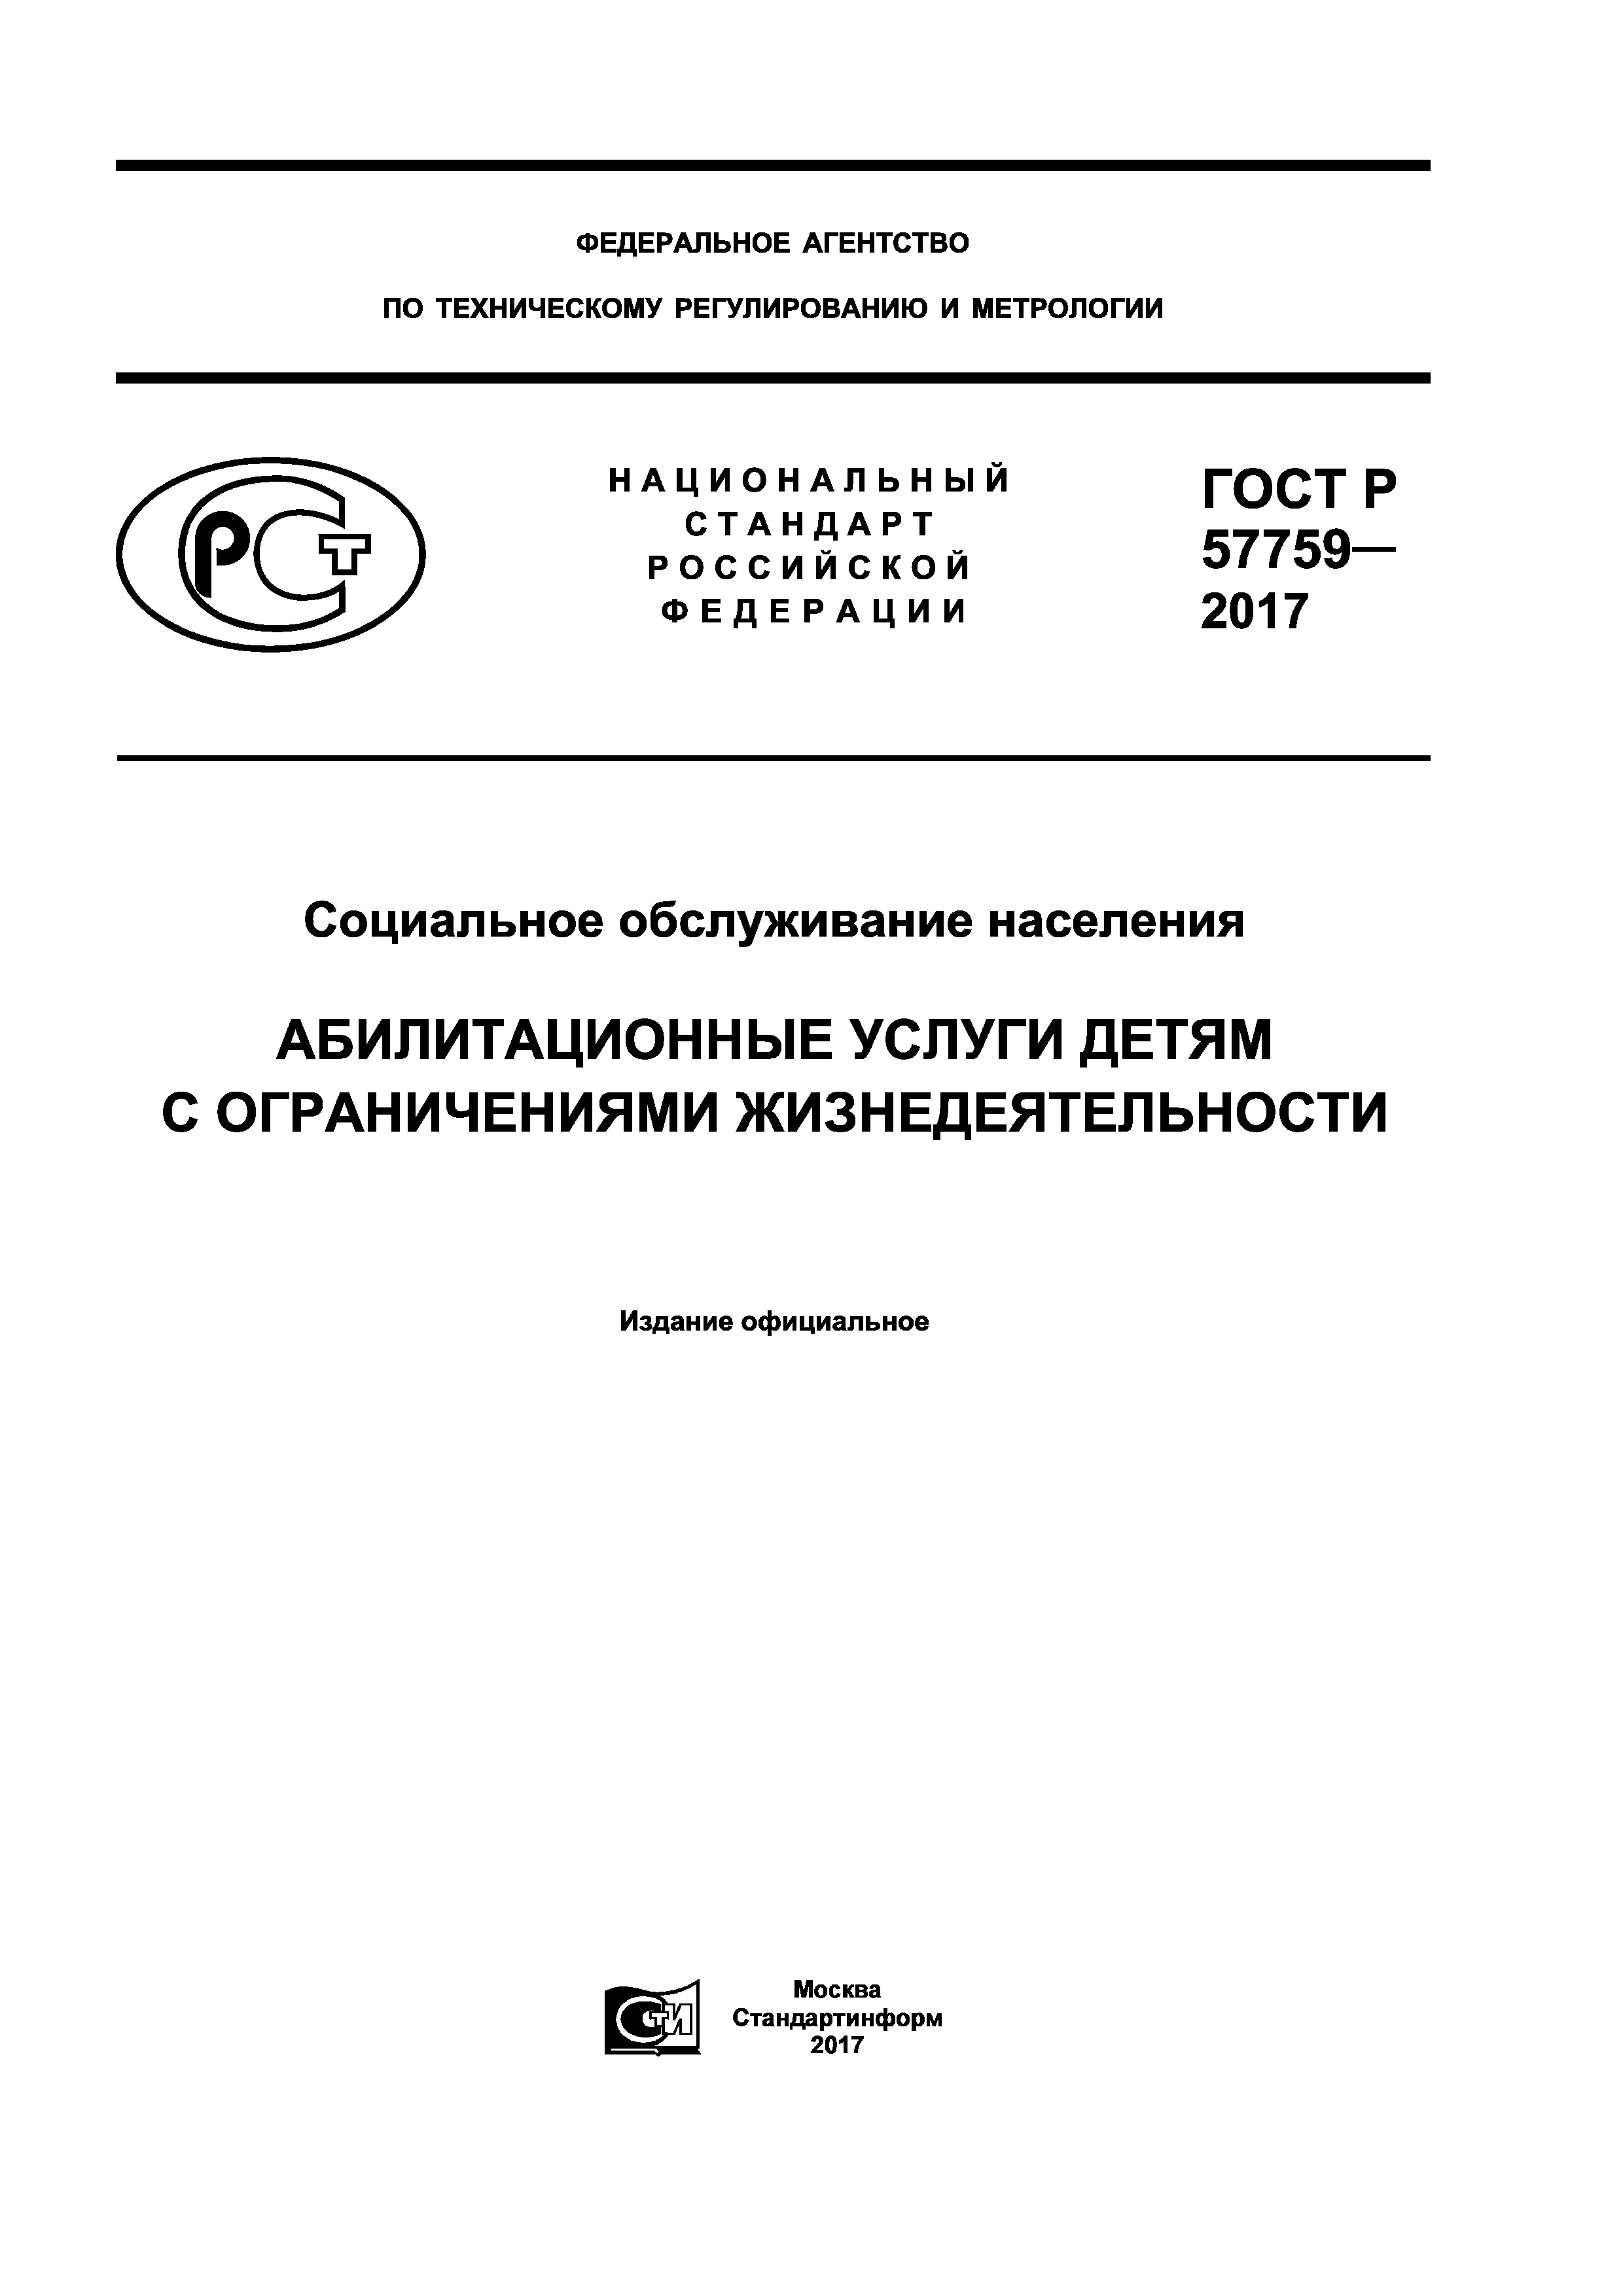 ГОСТ Р 57759-2017